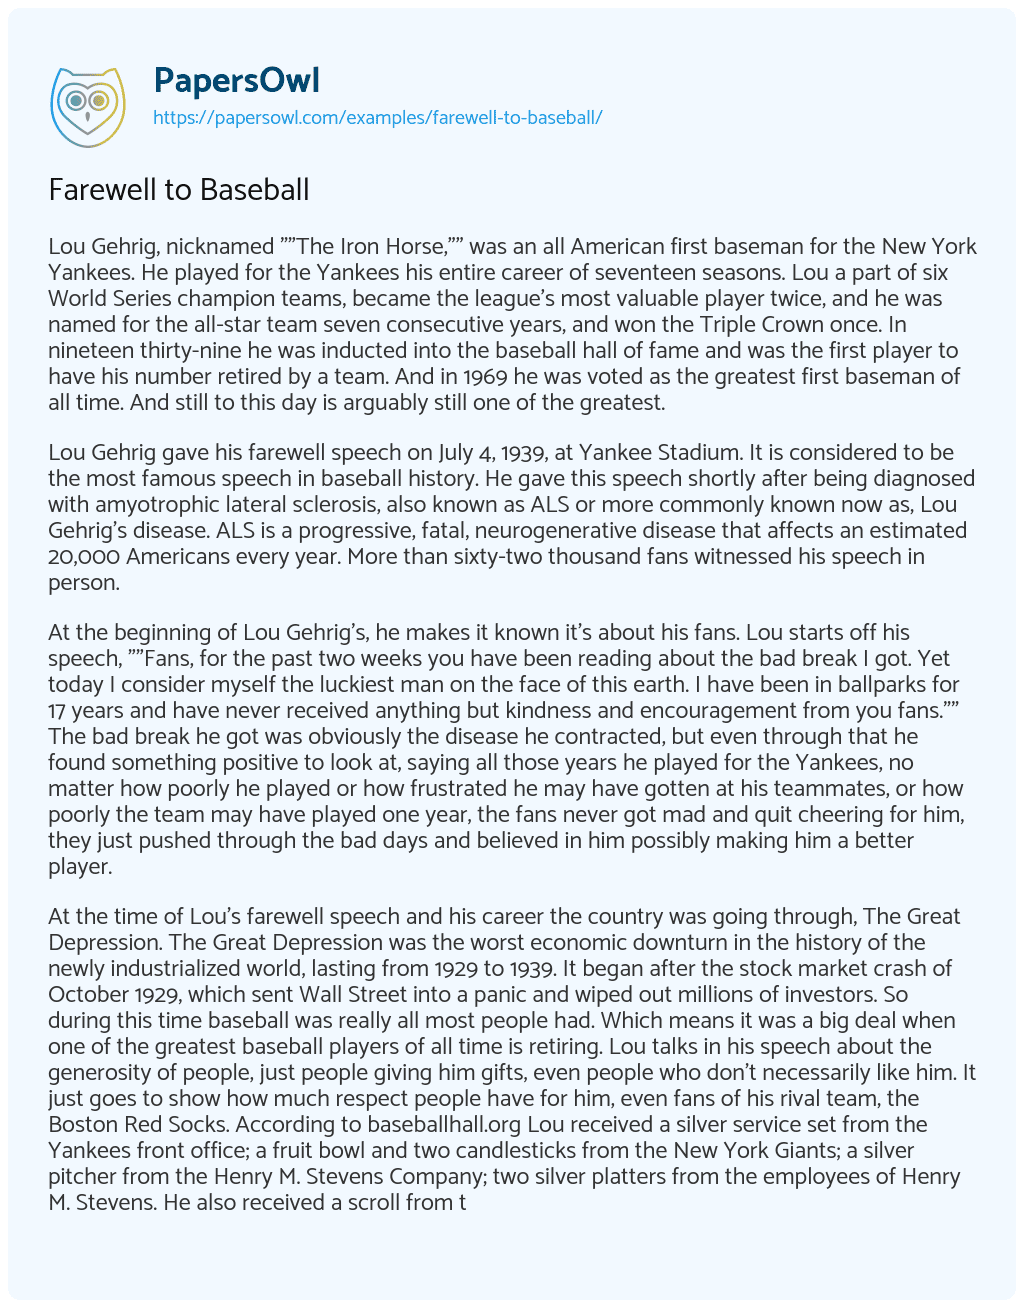 Essay on Farewell to Baseball